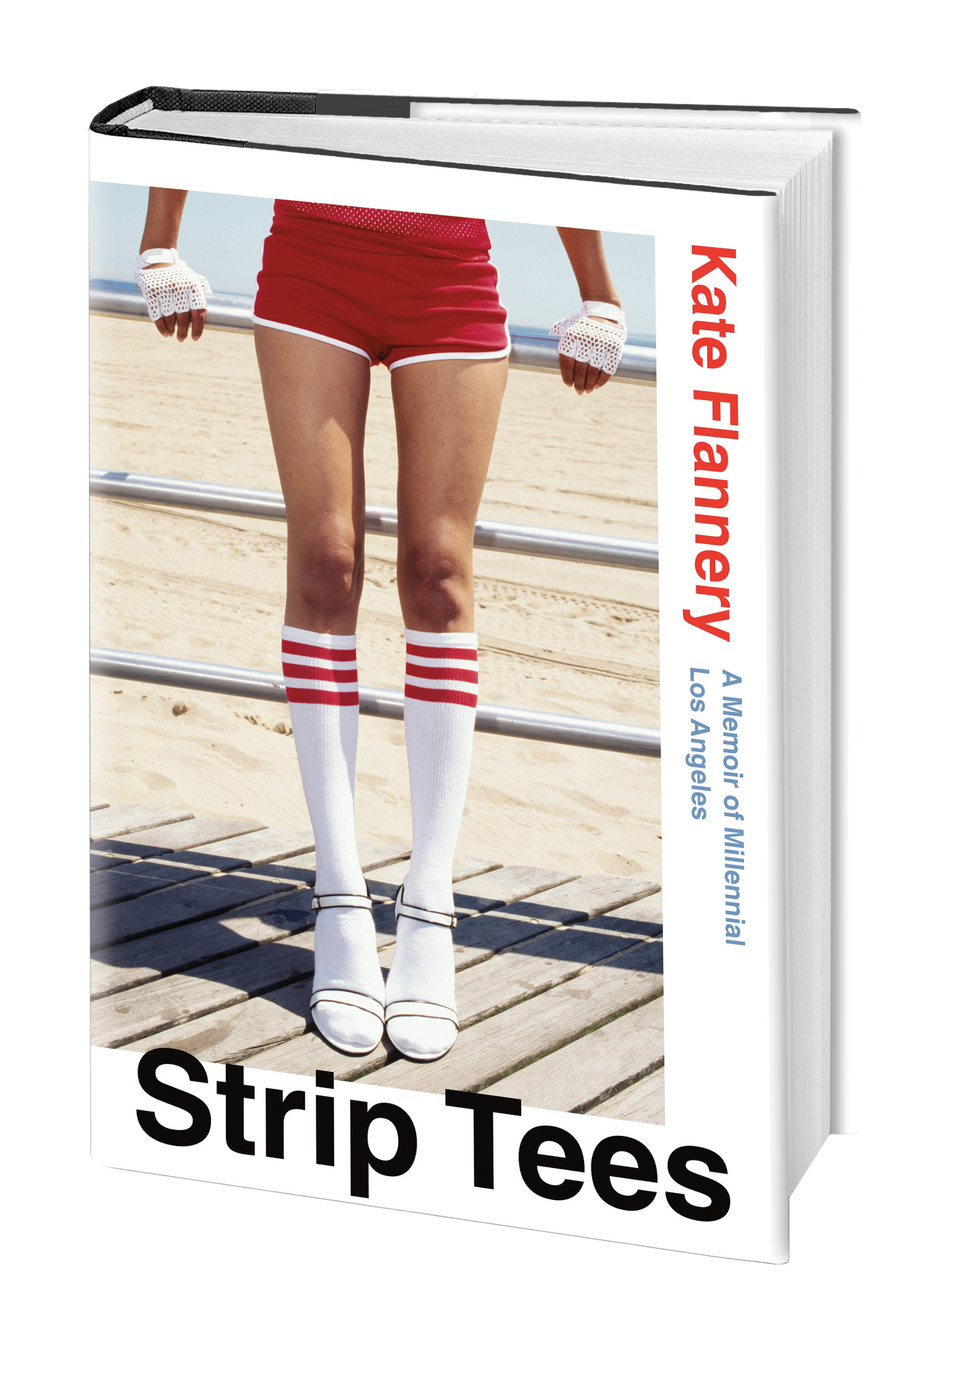 Strip tees american apparel memoir